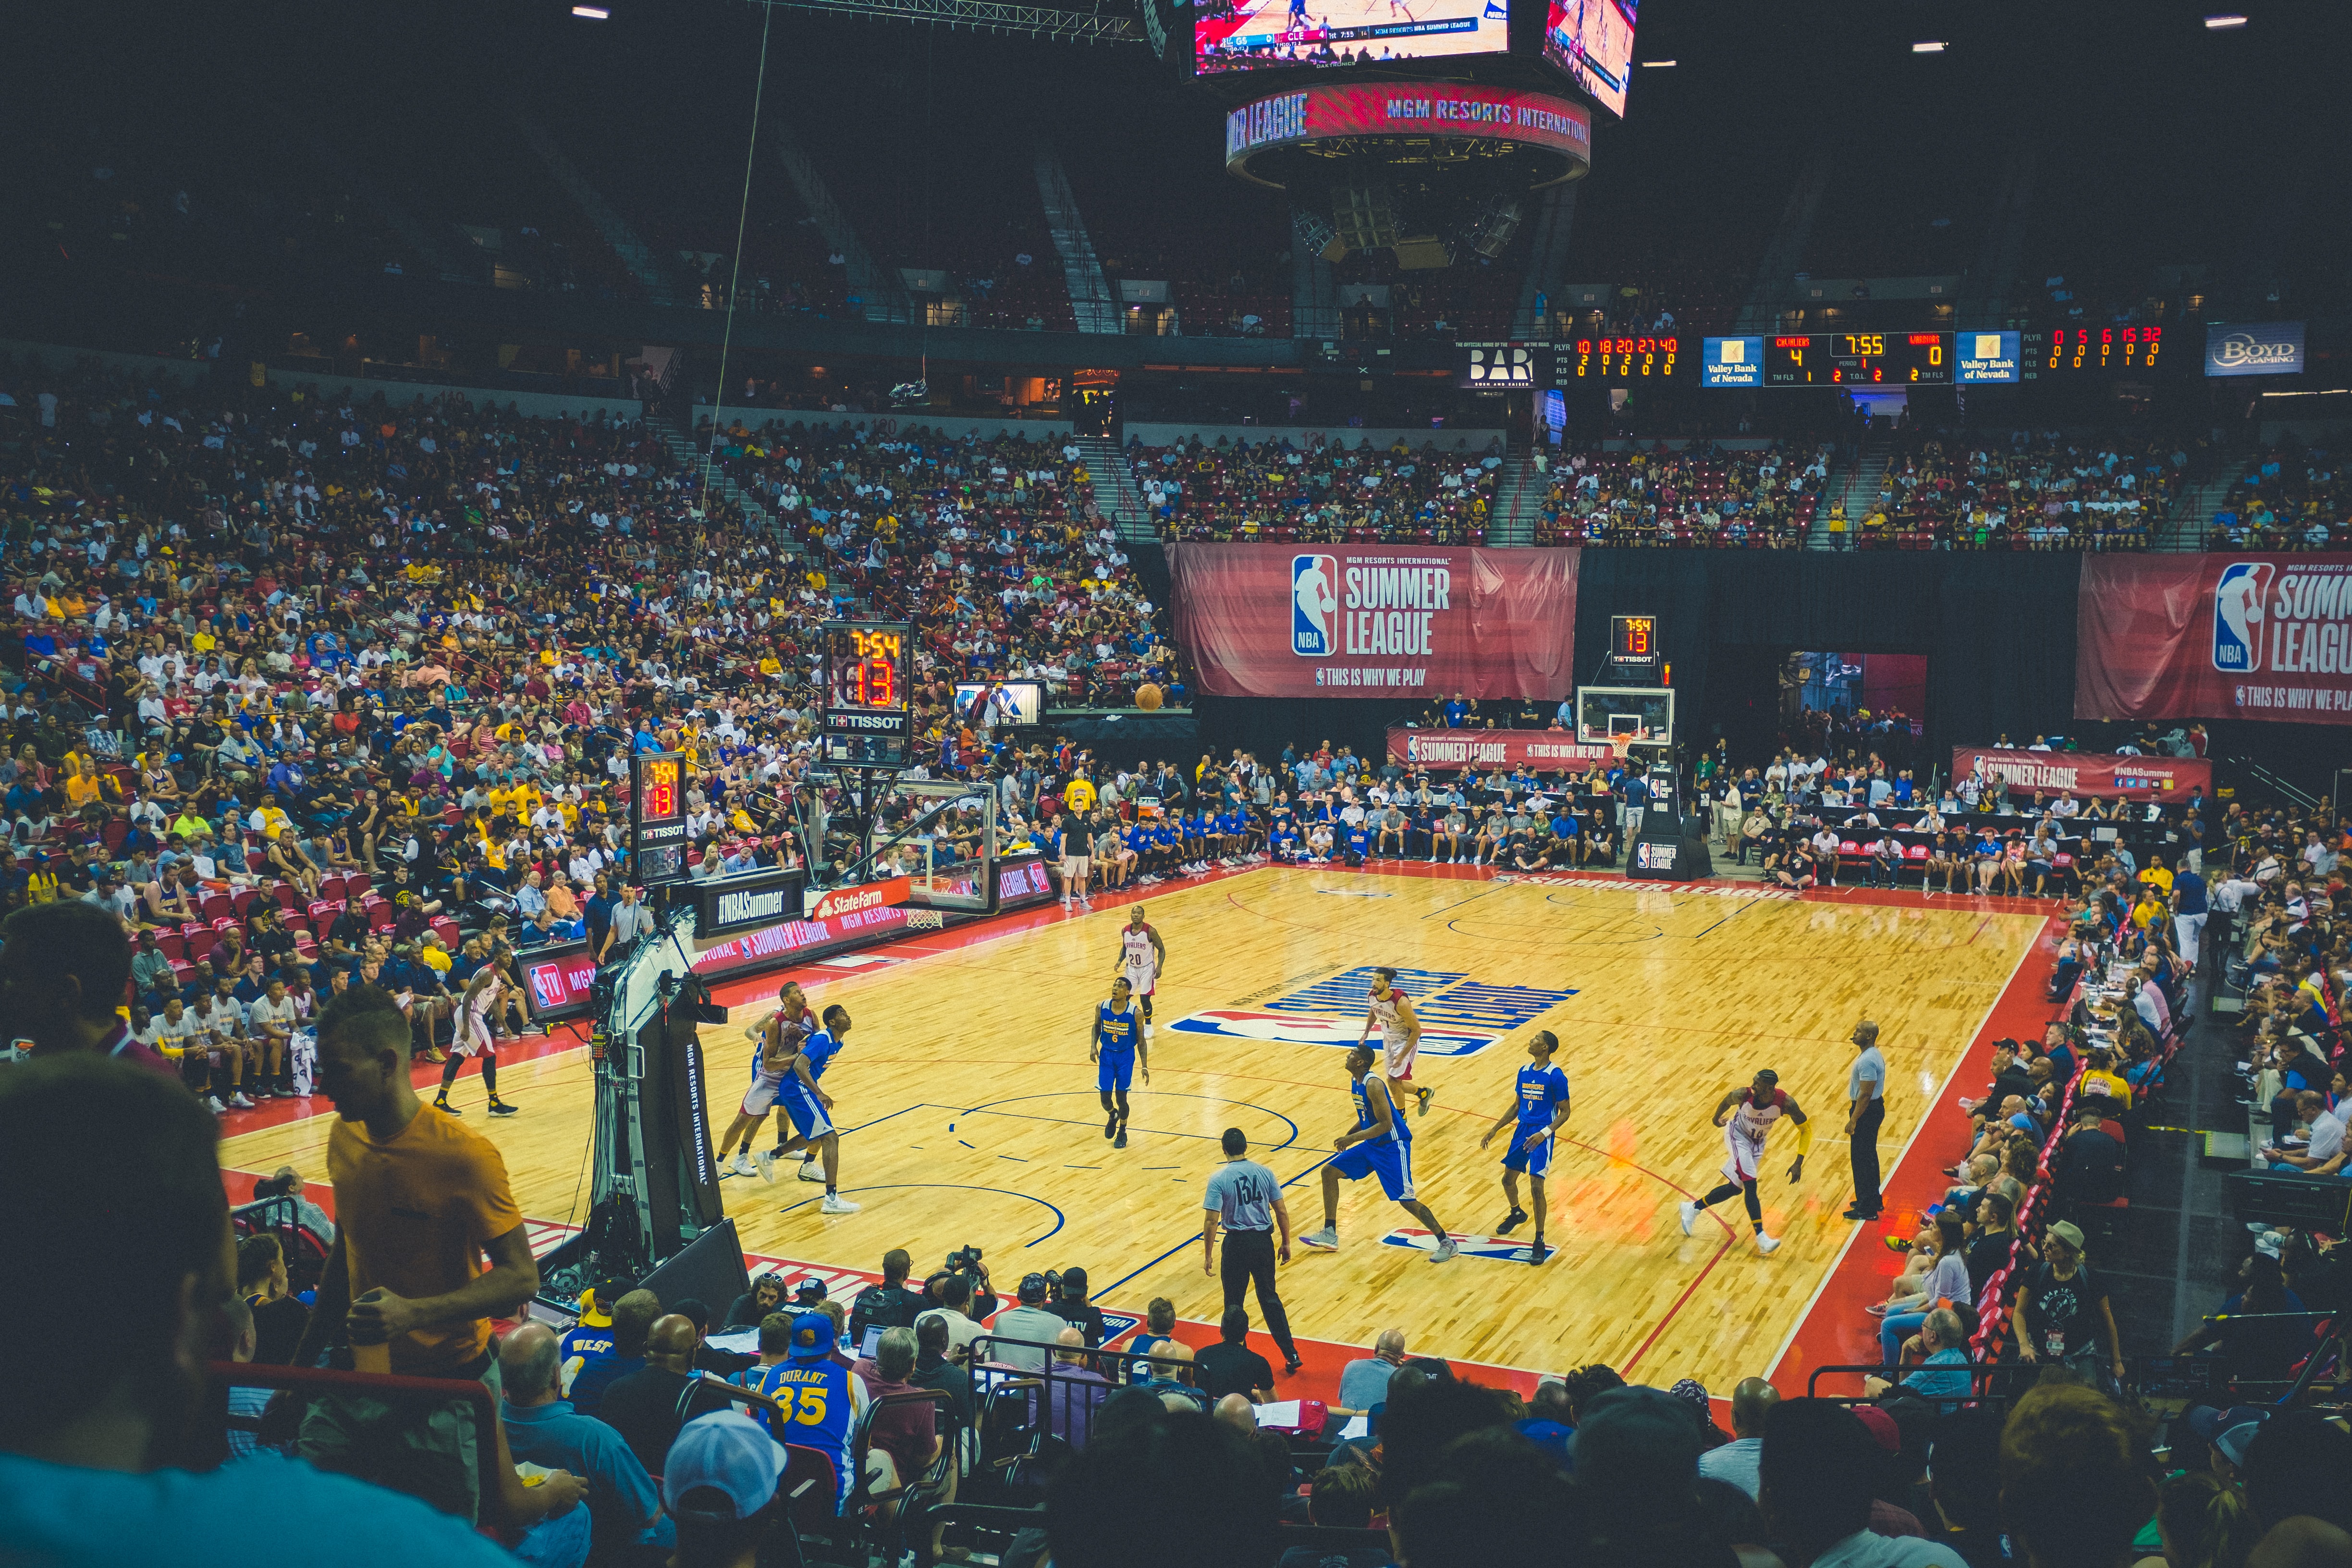 fondos de pantalla de baloncesto,cancha de baloncesto,jugador de baloncesto,ventilador,multitud,estadio